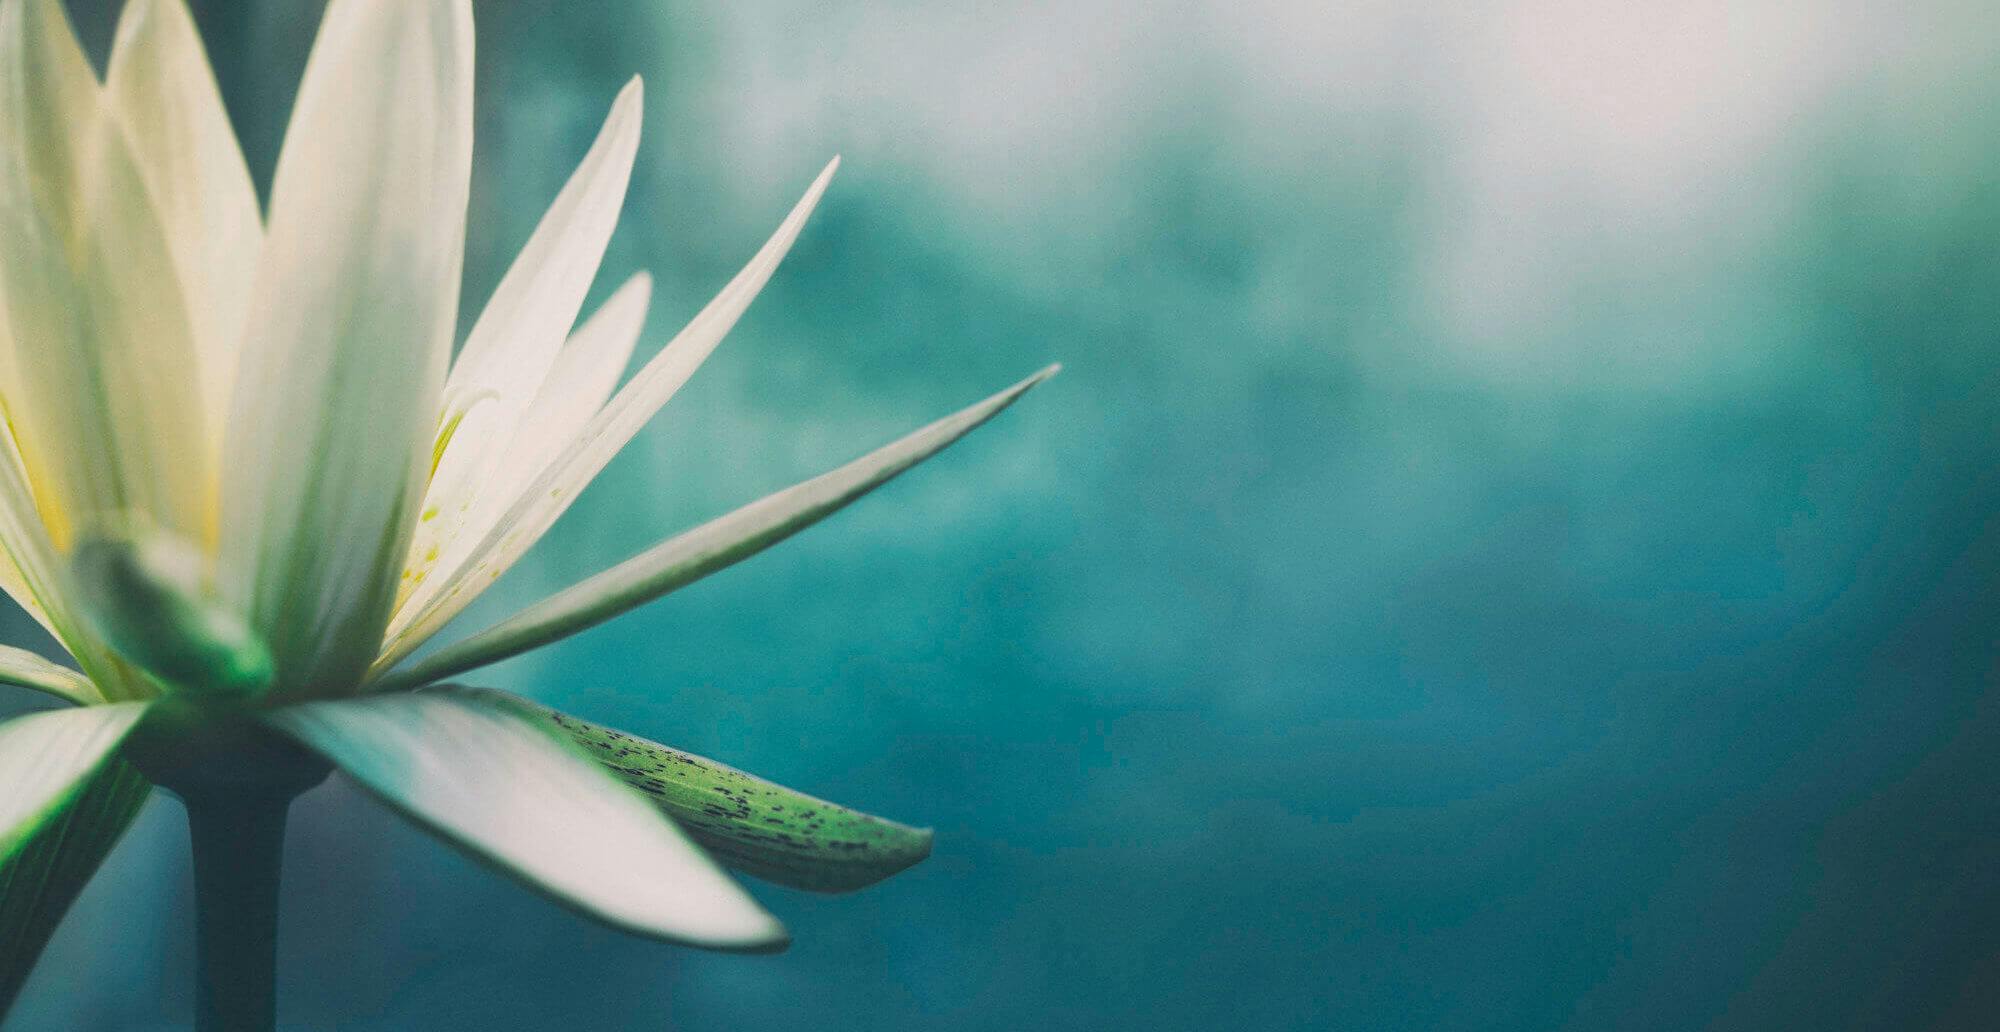 Serene lotus flower in soft green background